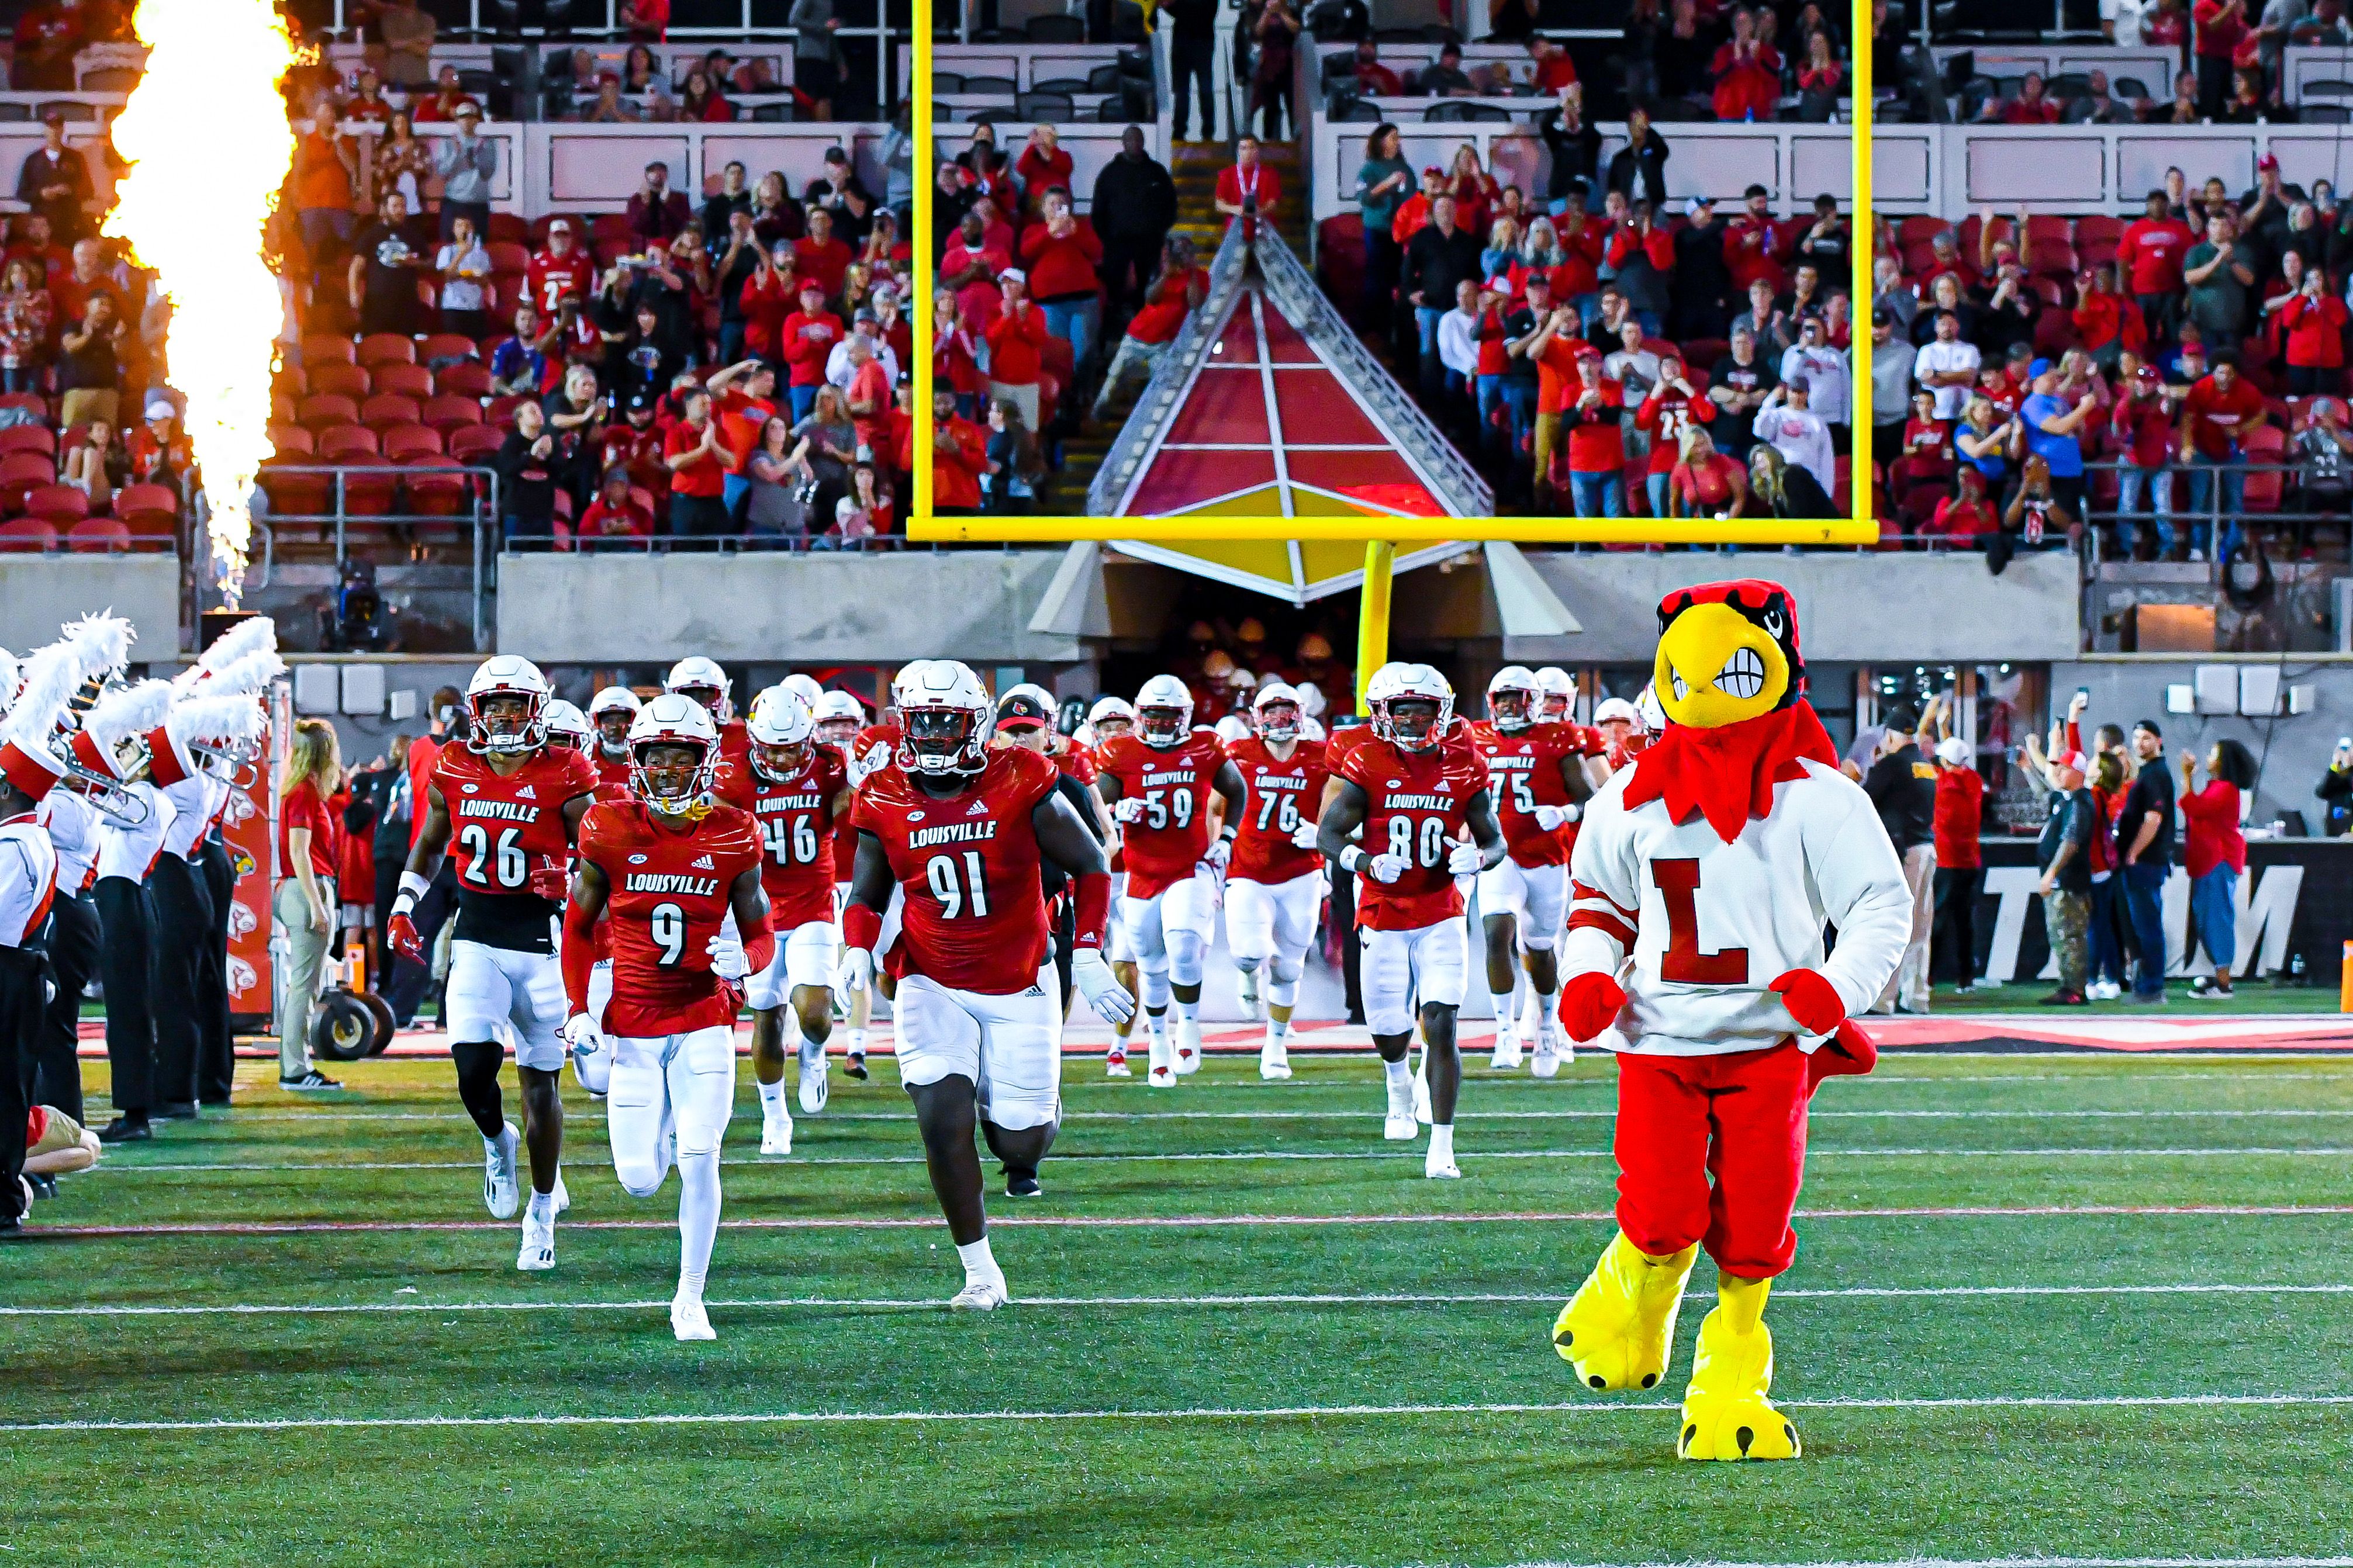 Louisville Football Previews New Features At Cardinal Stadium